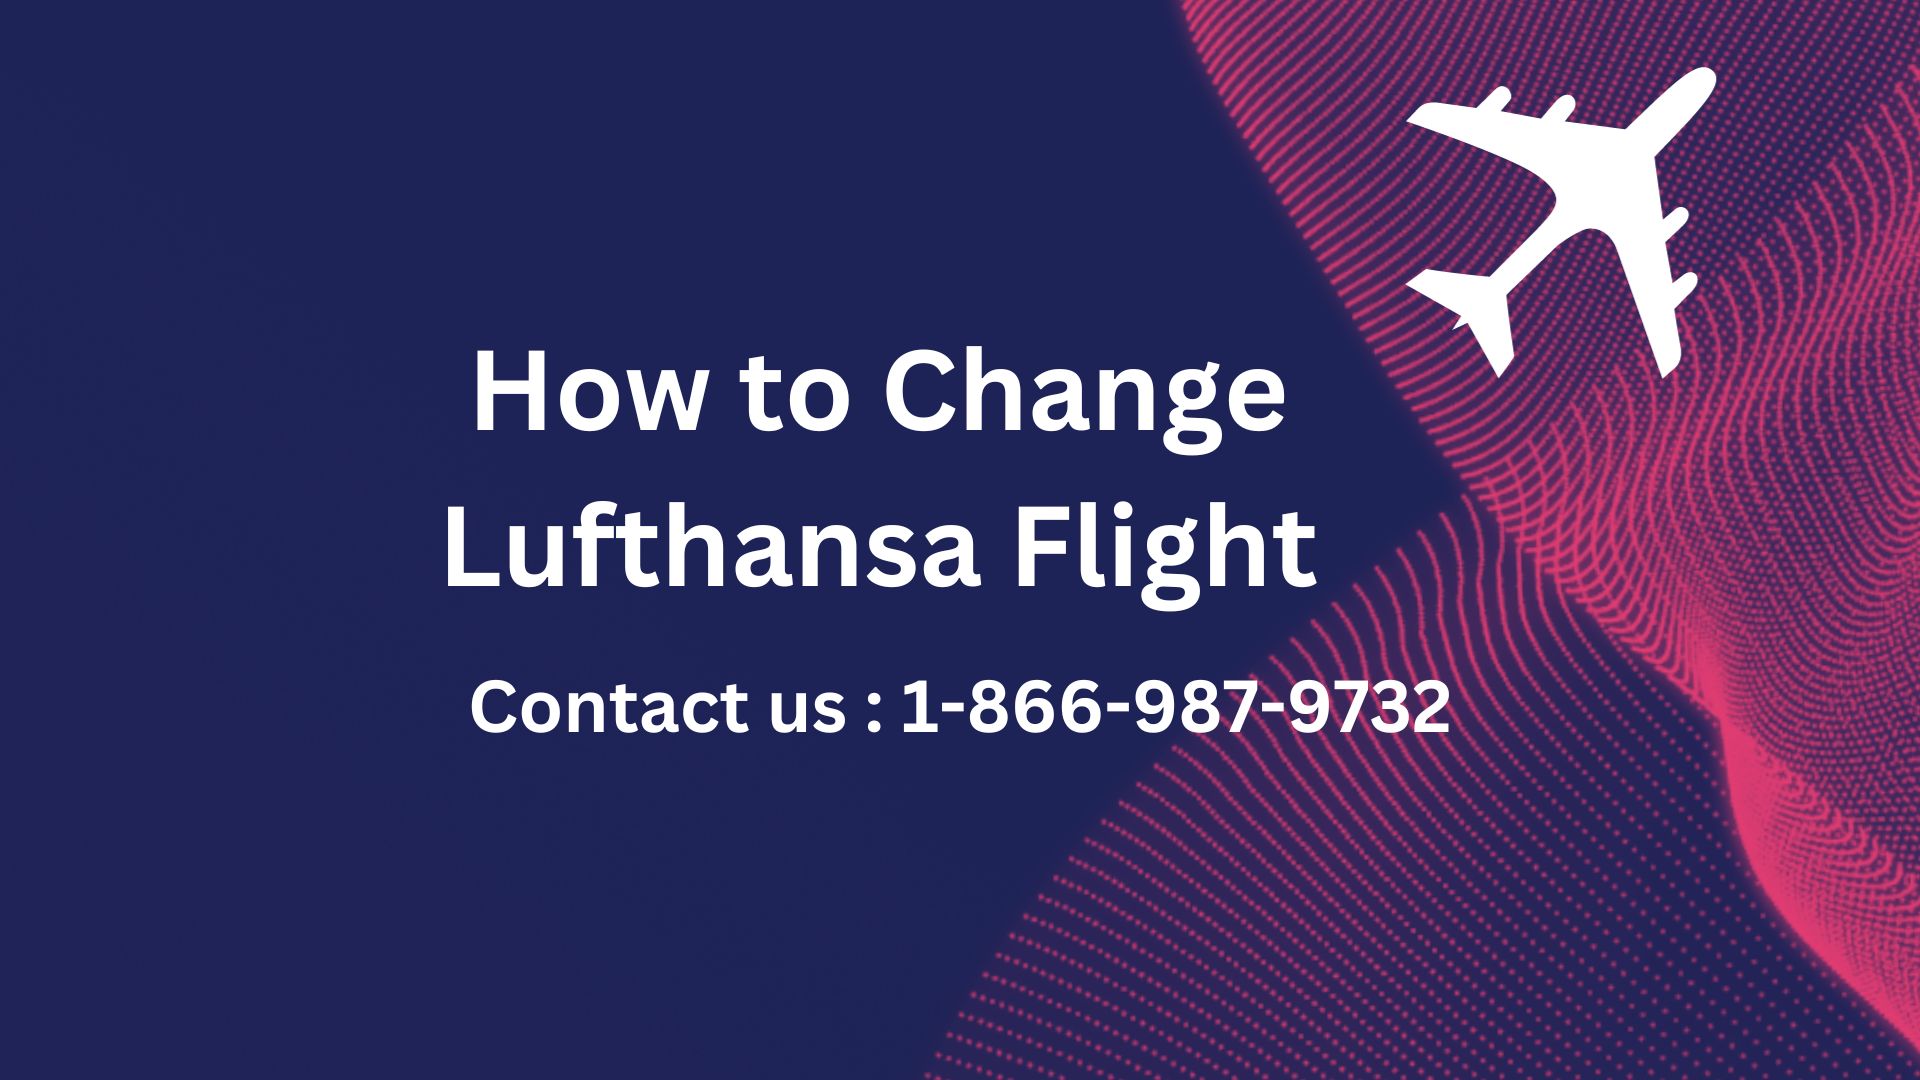 How to Change Lufthansa Flight